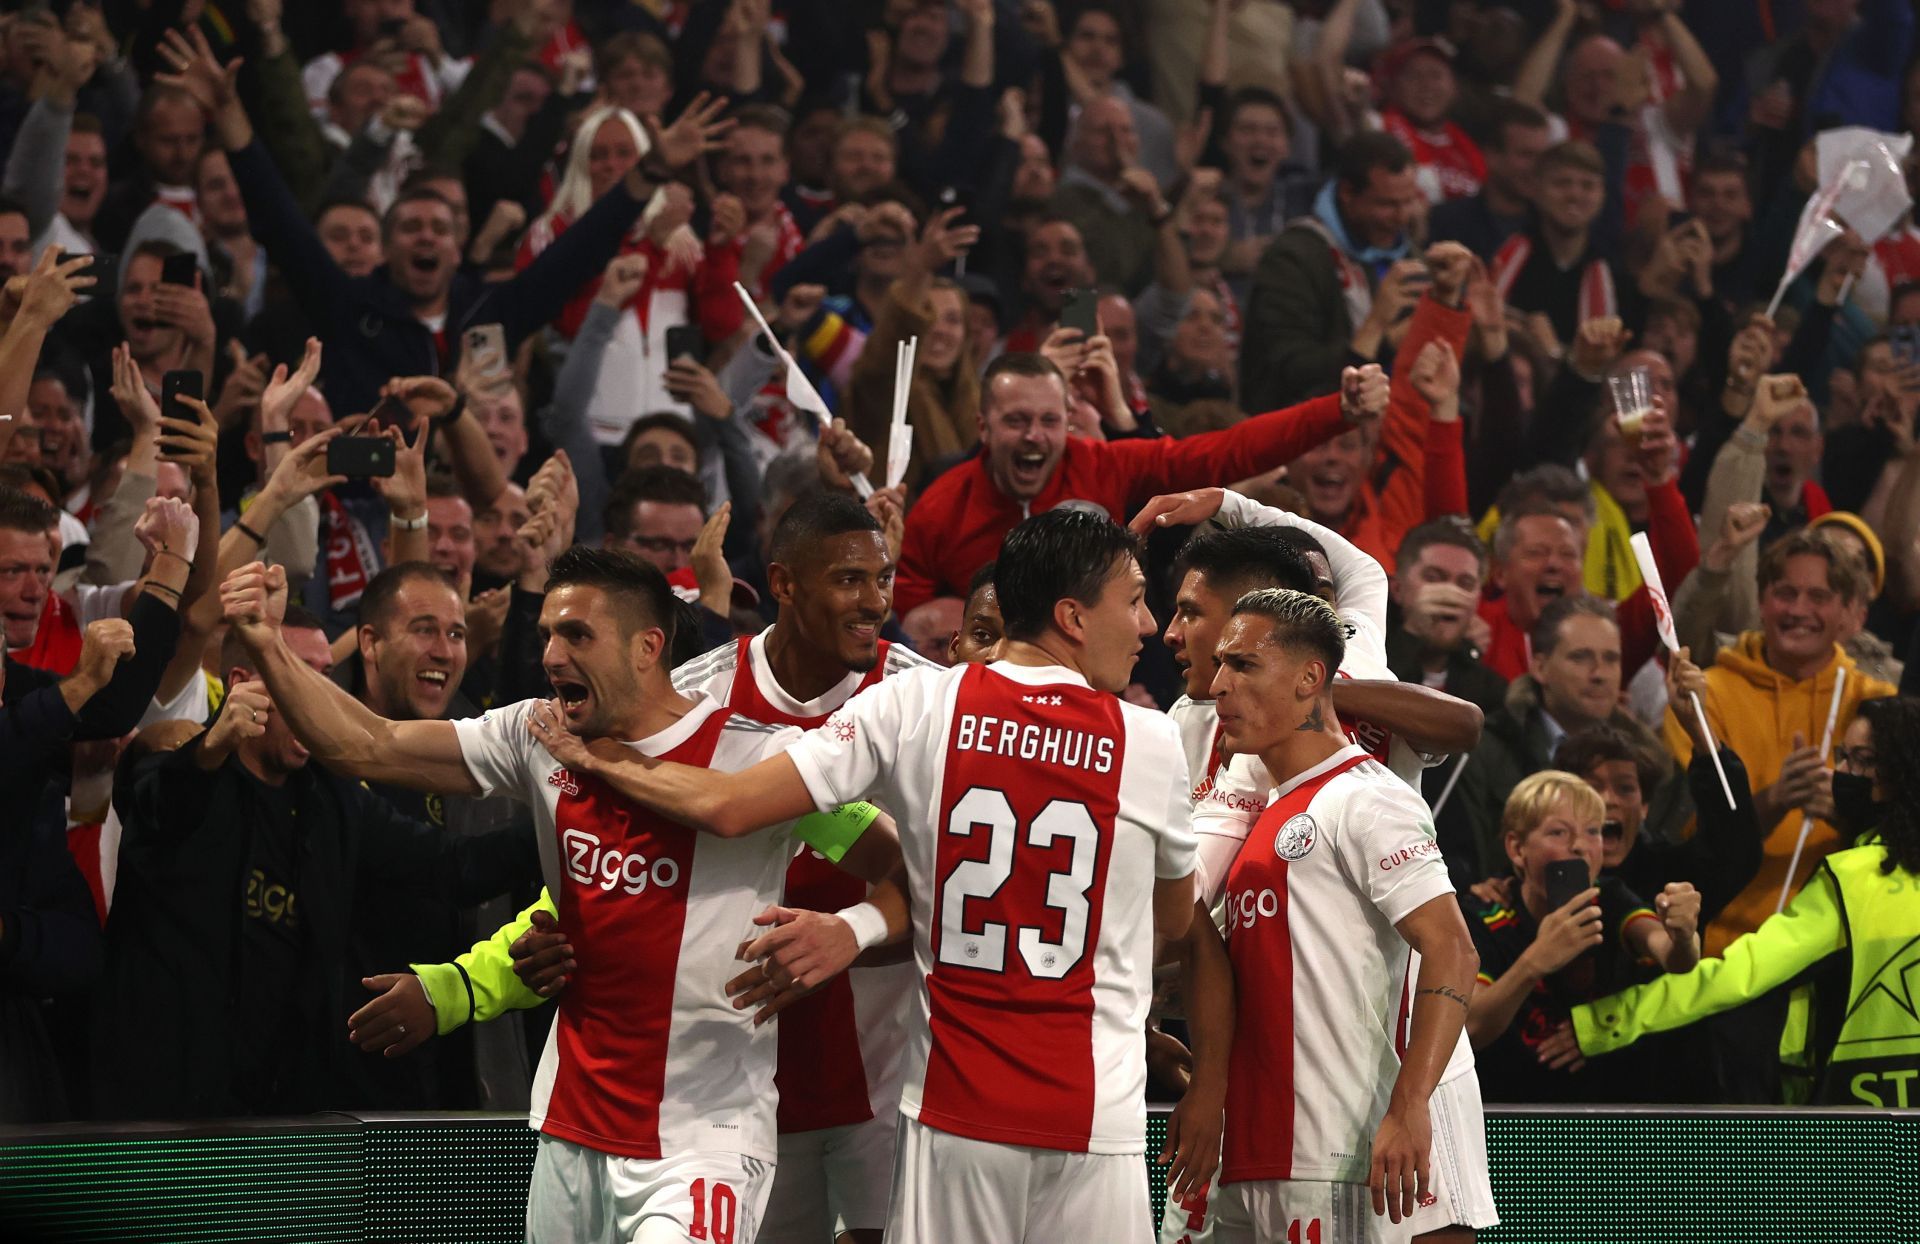 AFC Ajax will face Heracles on Sunda